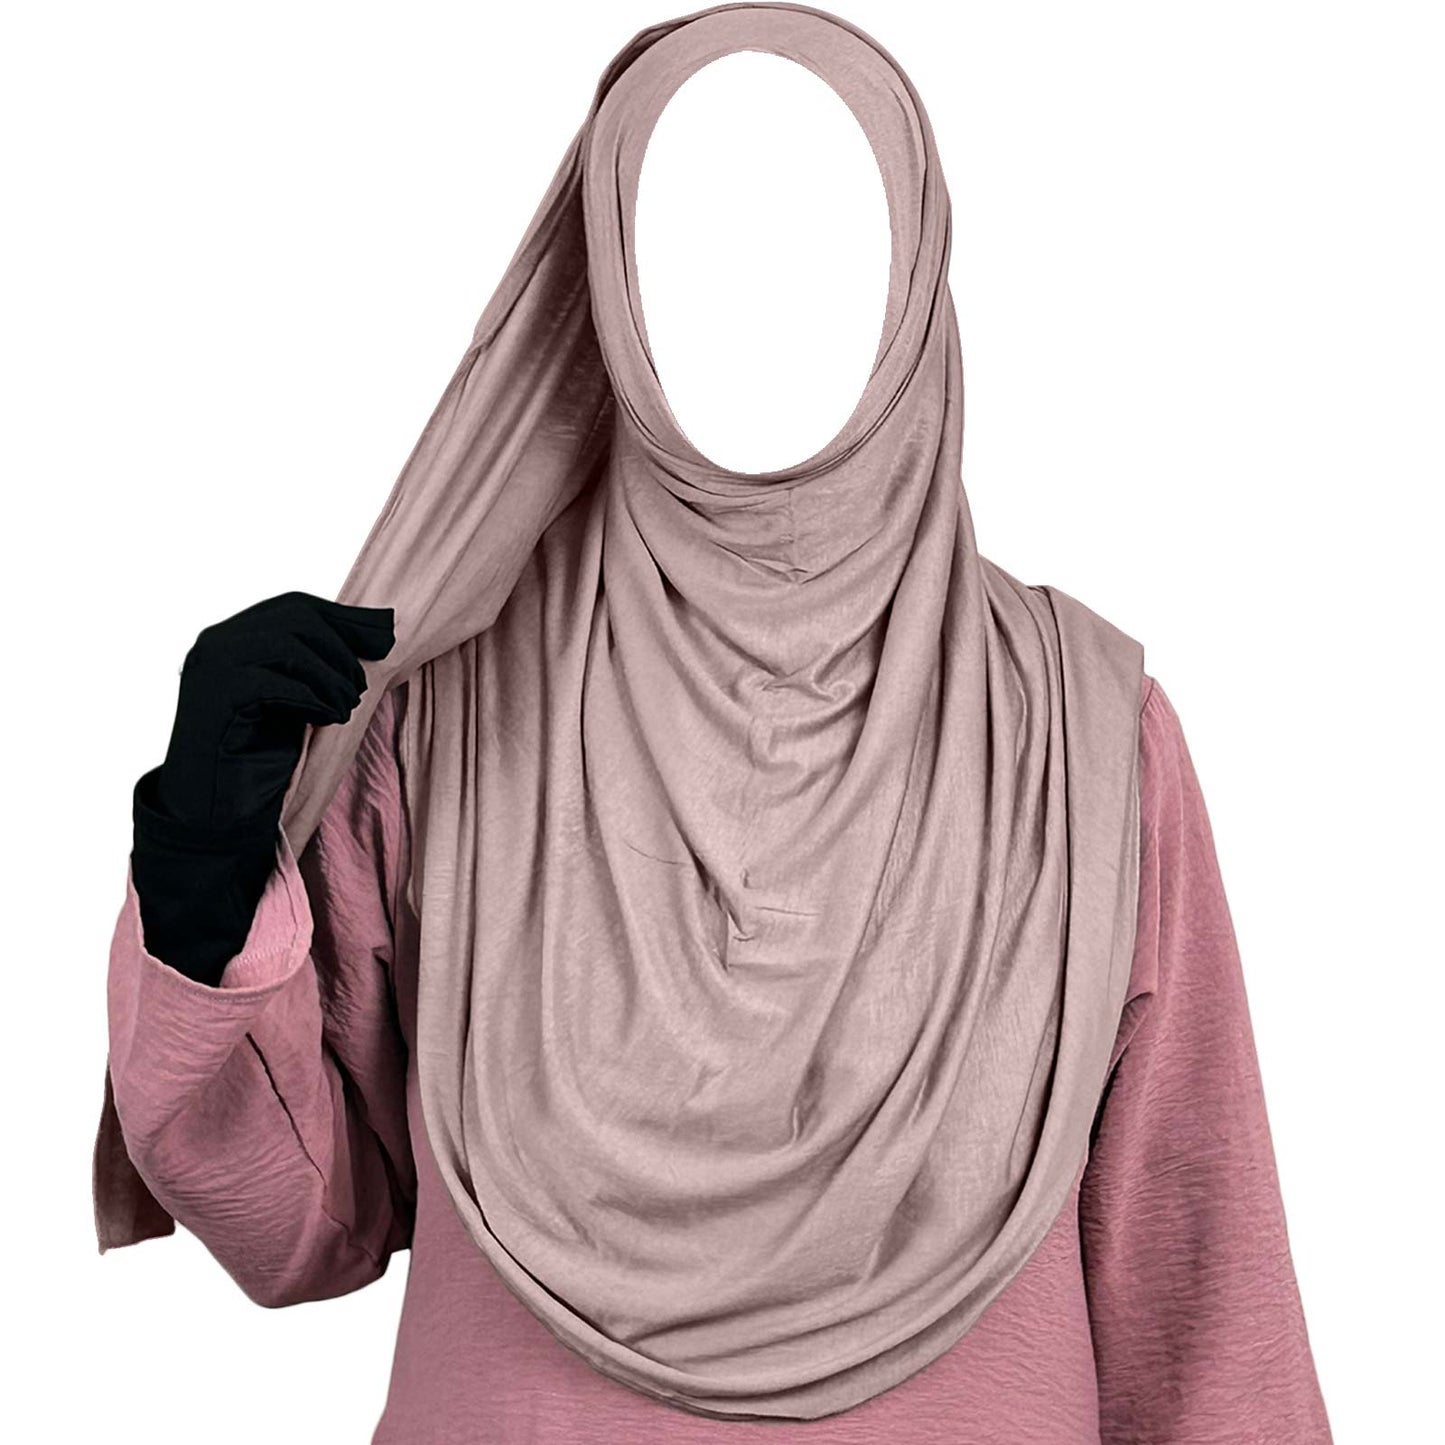 pale pink jersey hijab for Muslim women